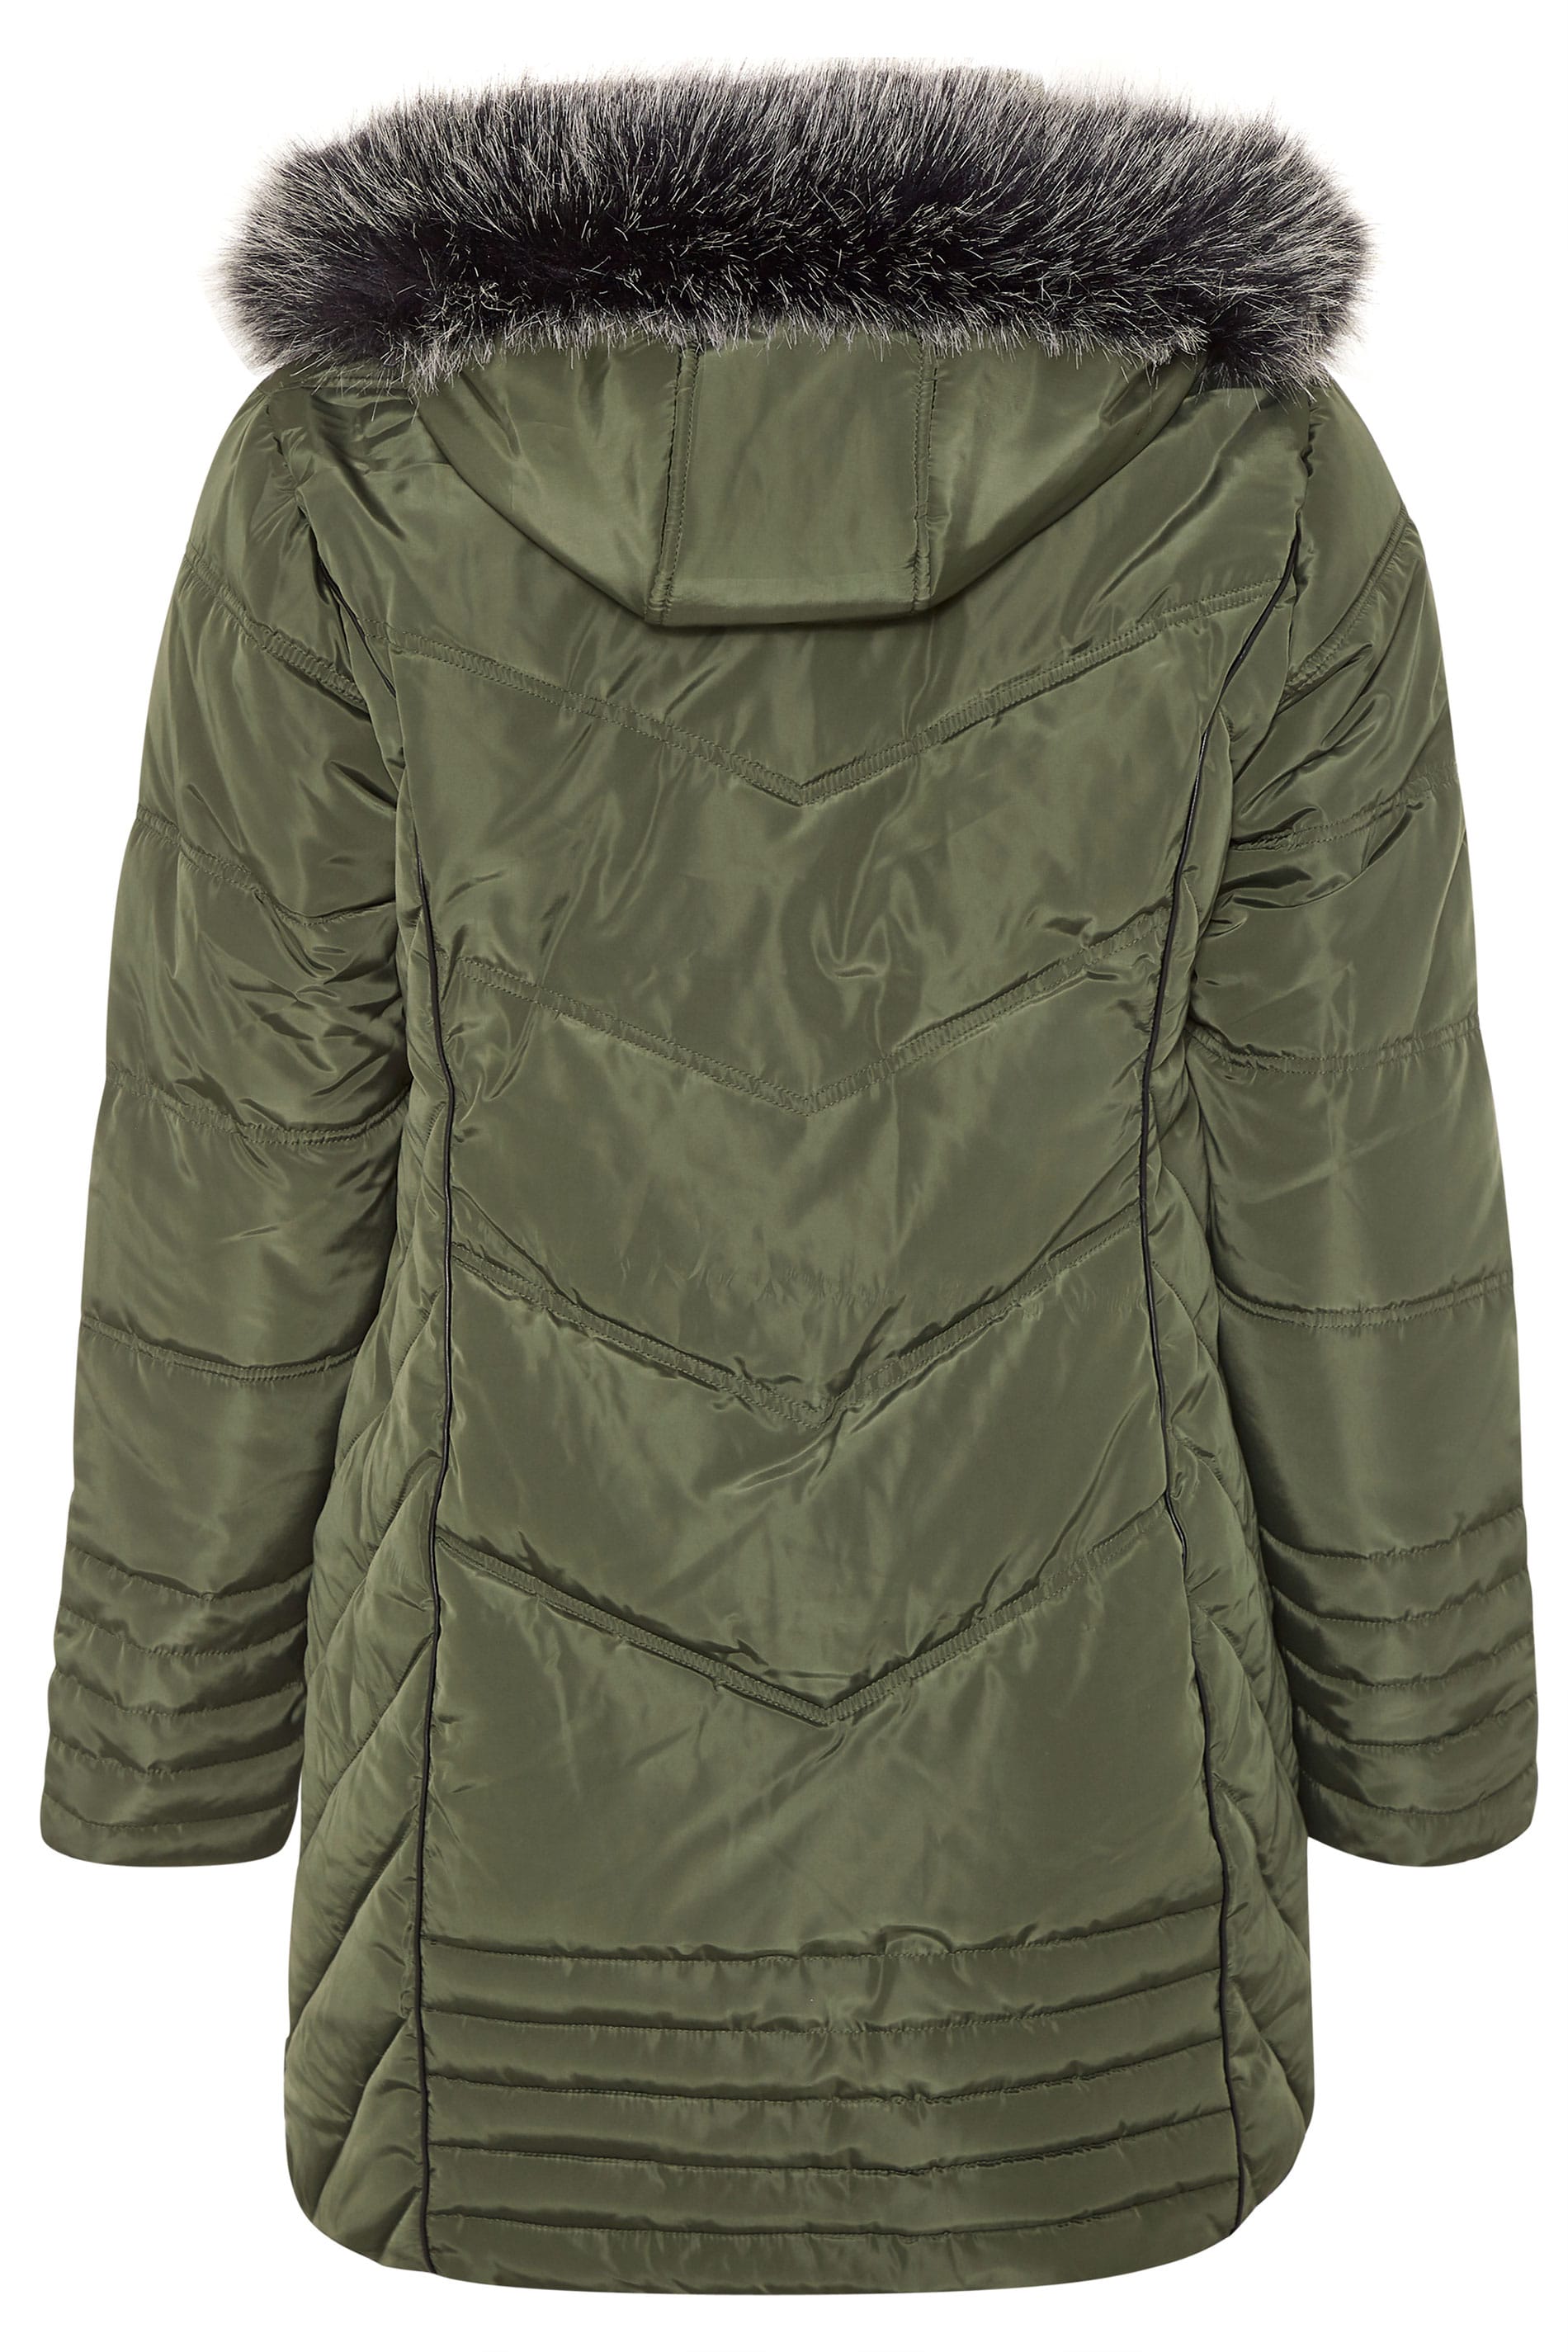 BUMP IT UP MATERNITY Khaki Green PU Trim Longline Puffer Jacket | Yours ...